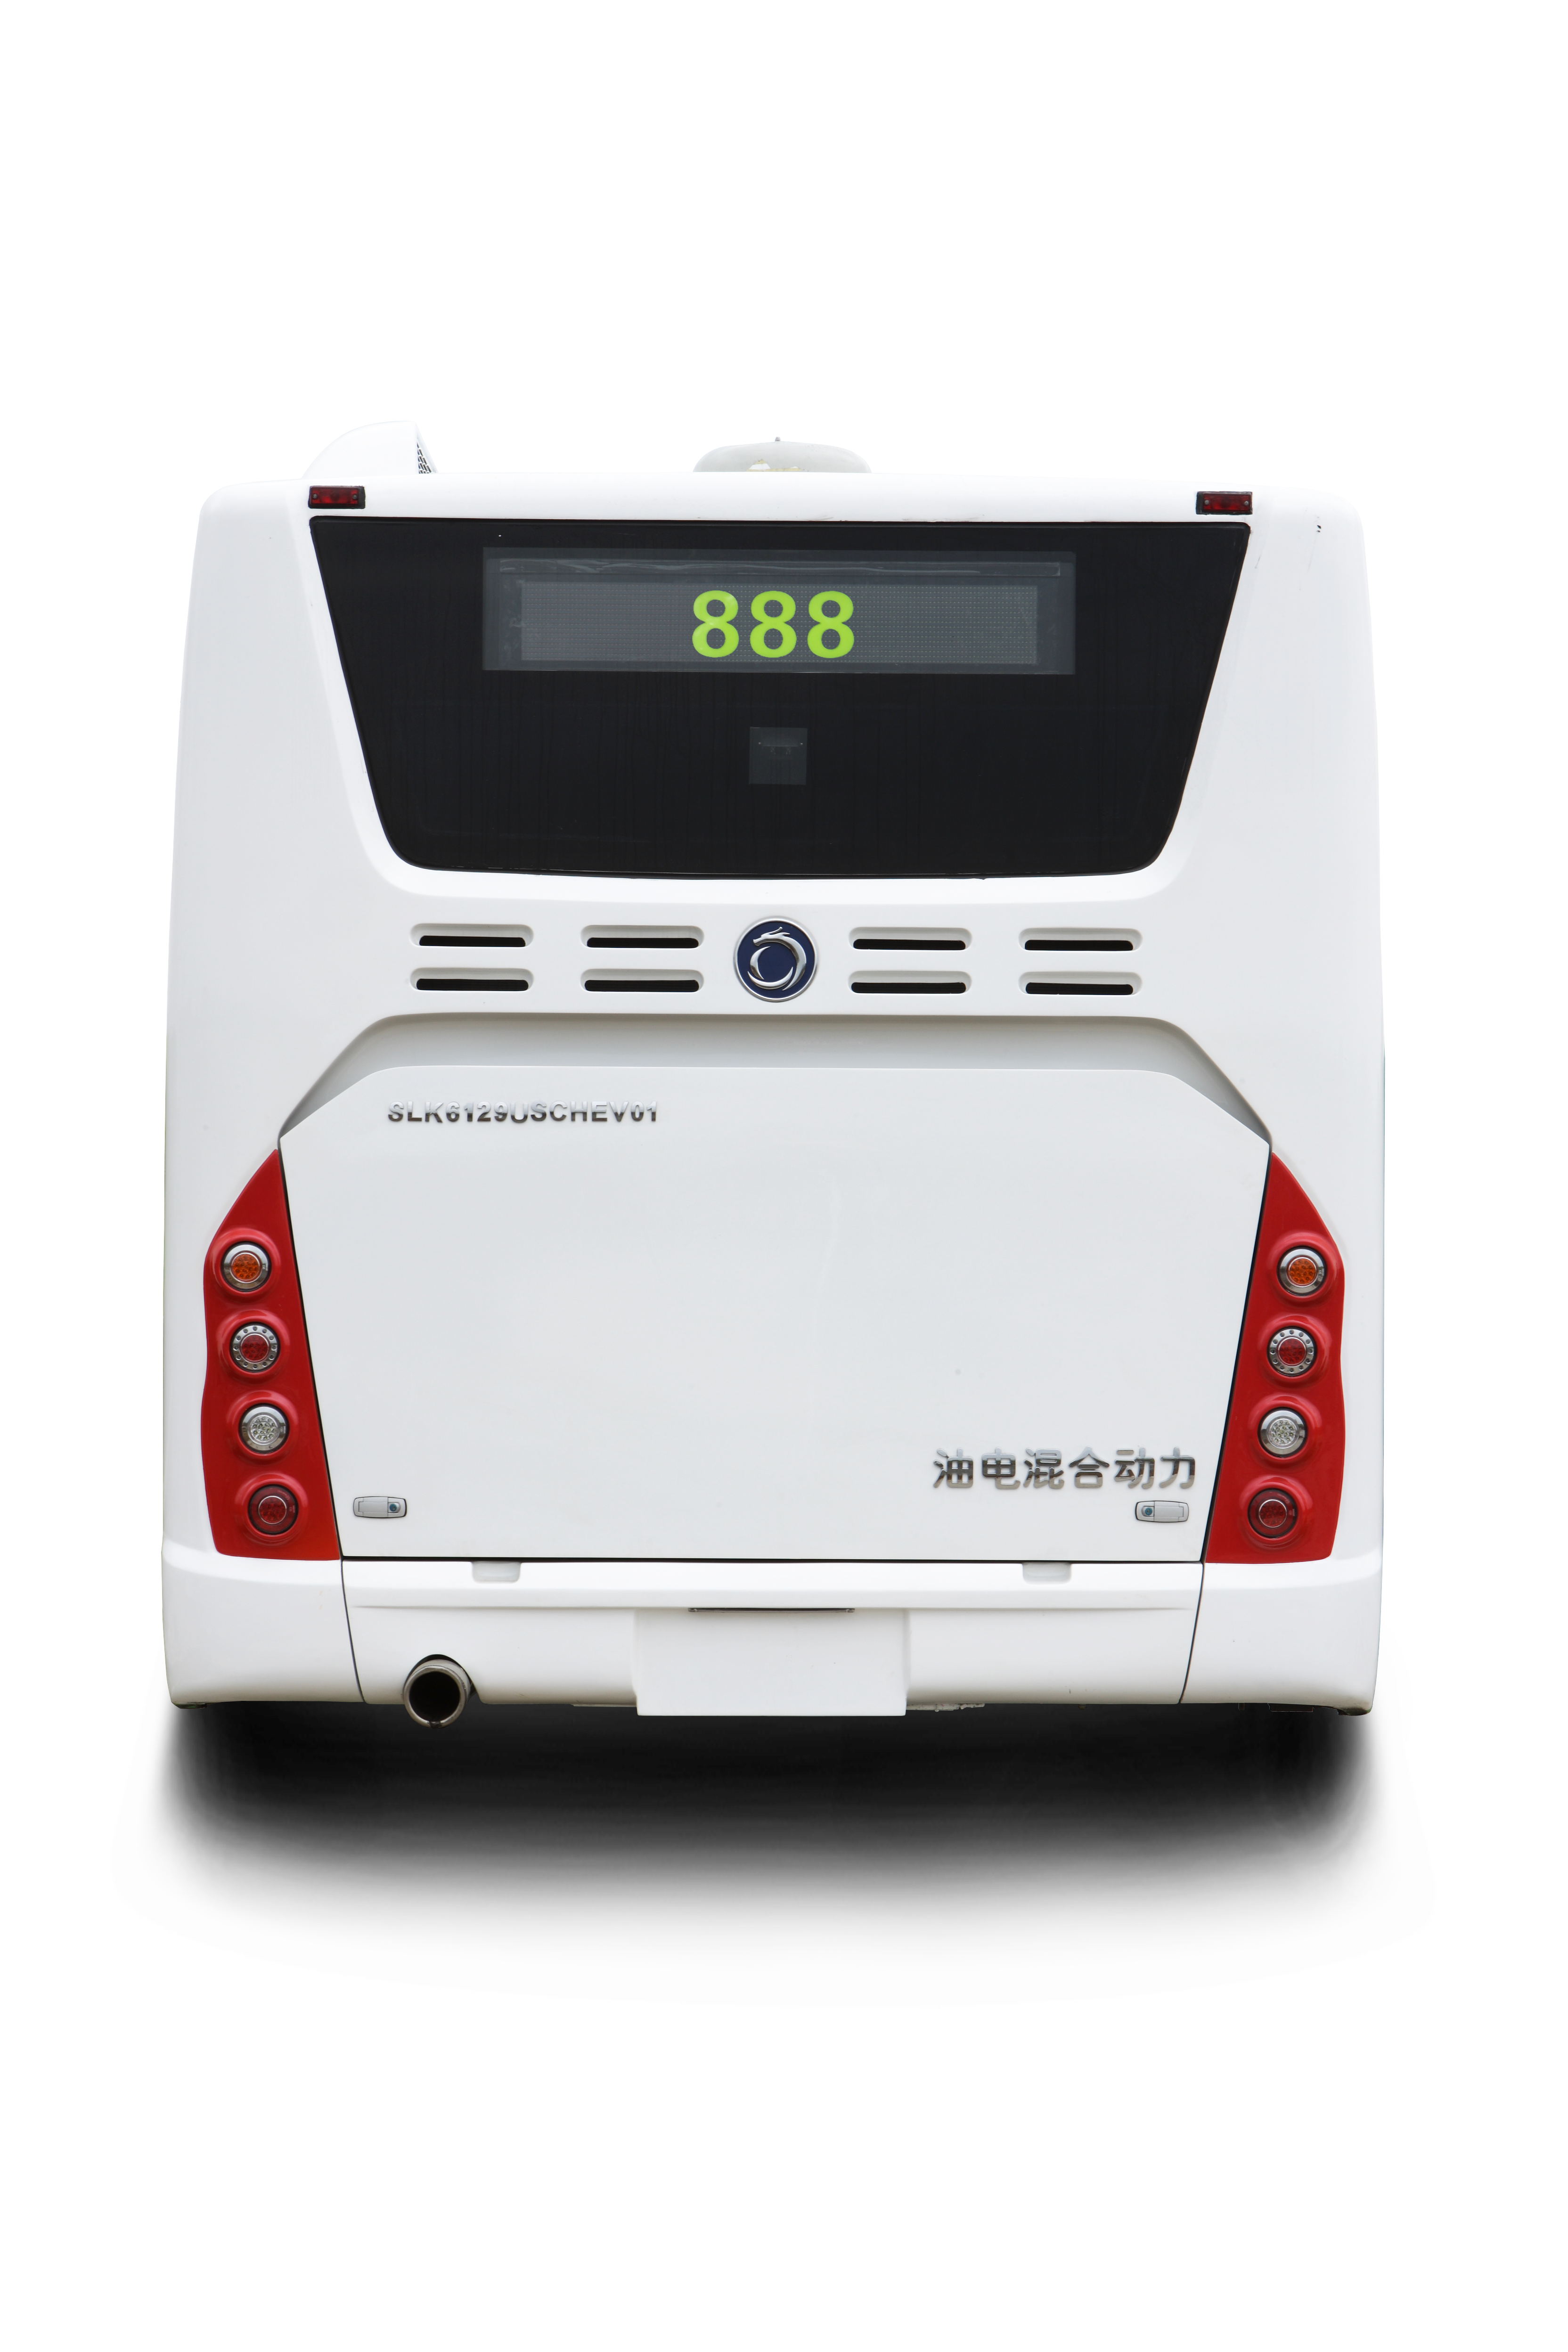 SLK6129混合動力,11-12米,上海申龍客車有限公司,上海申龍客車有限公司-09